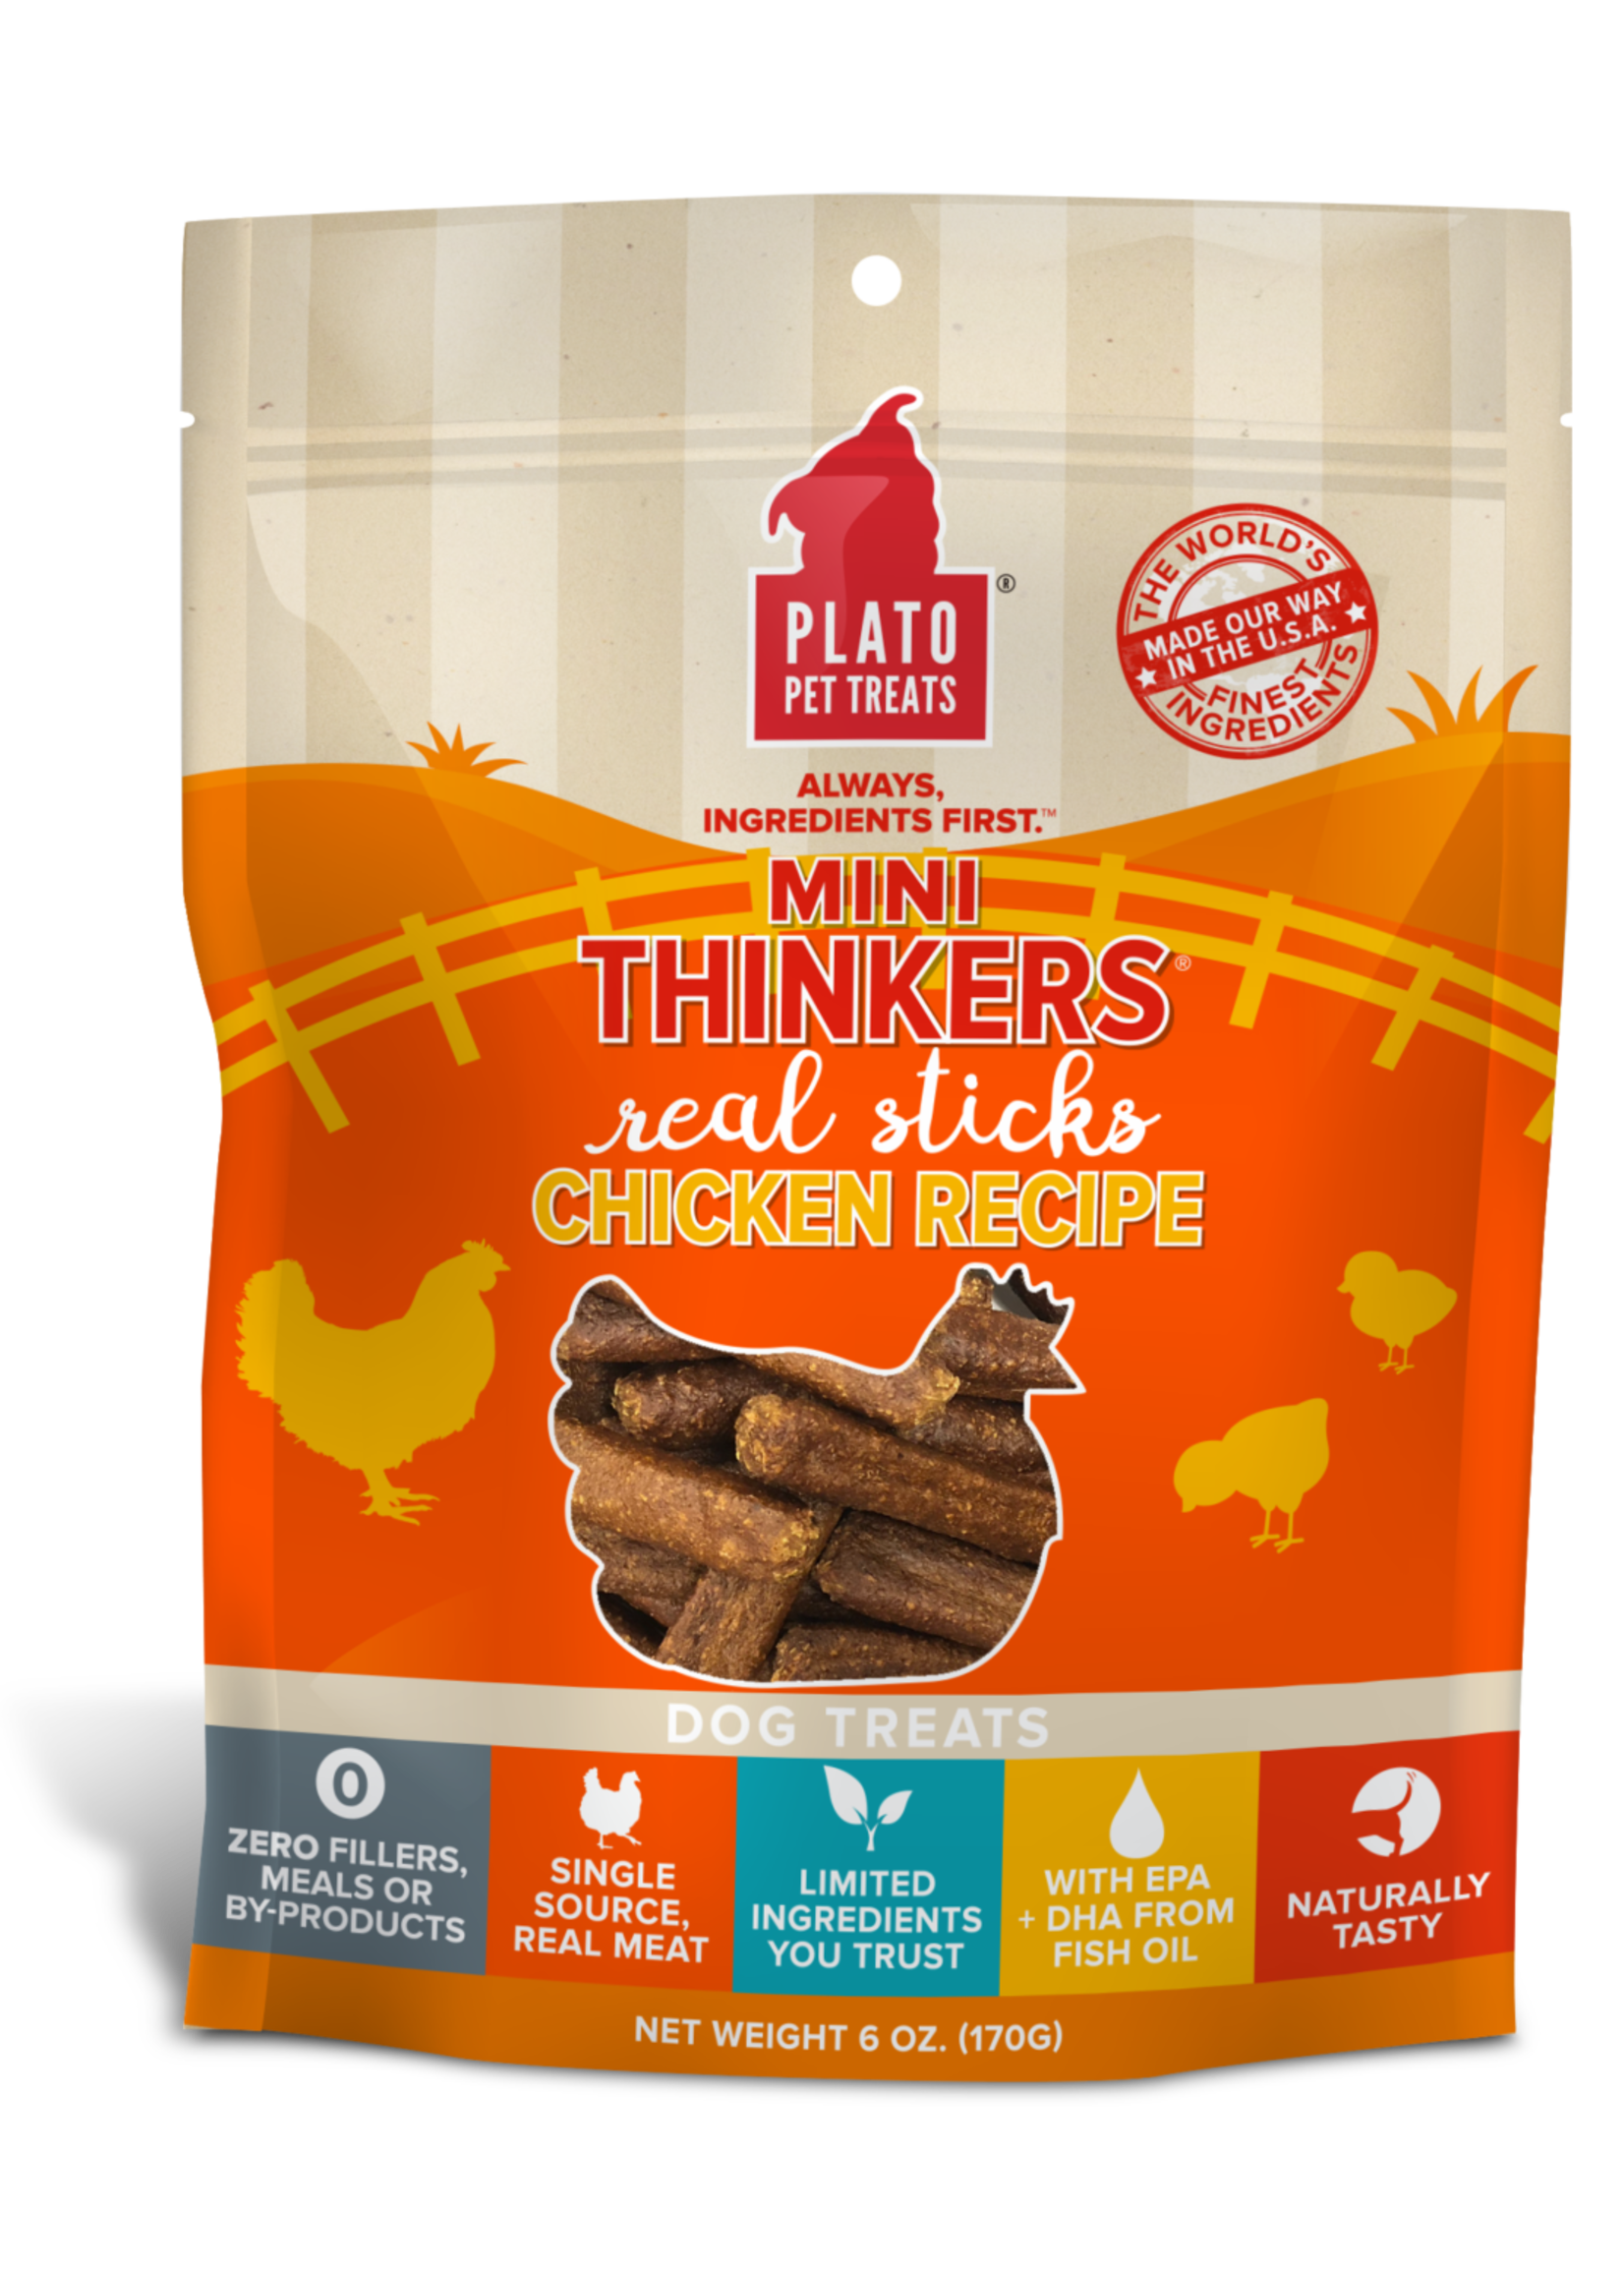 Plato Pet Treats Plato Pet Treats Mini Thinkers Chicken Recipe Meat Sticks Dog Treats 6-oz